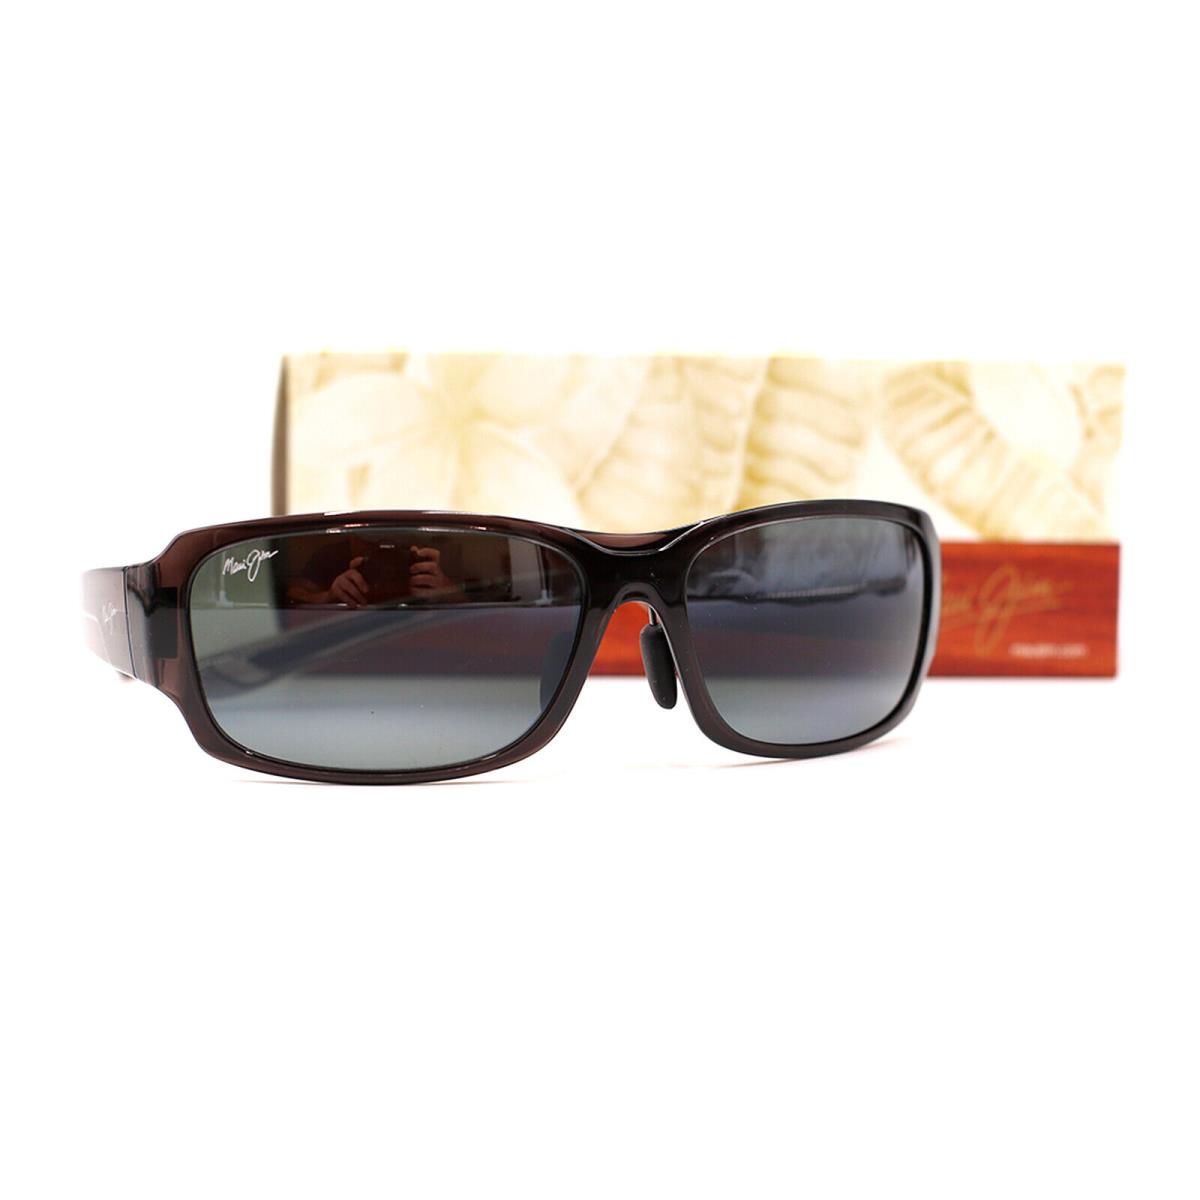 Maui Jim Monkeypod 441-11A Gray Fade Wrapped Sunglasses Polarized Gray Lenses